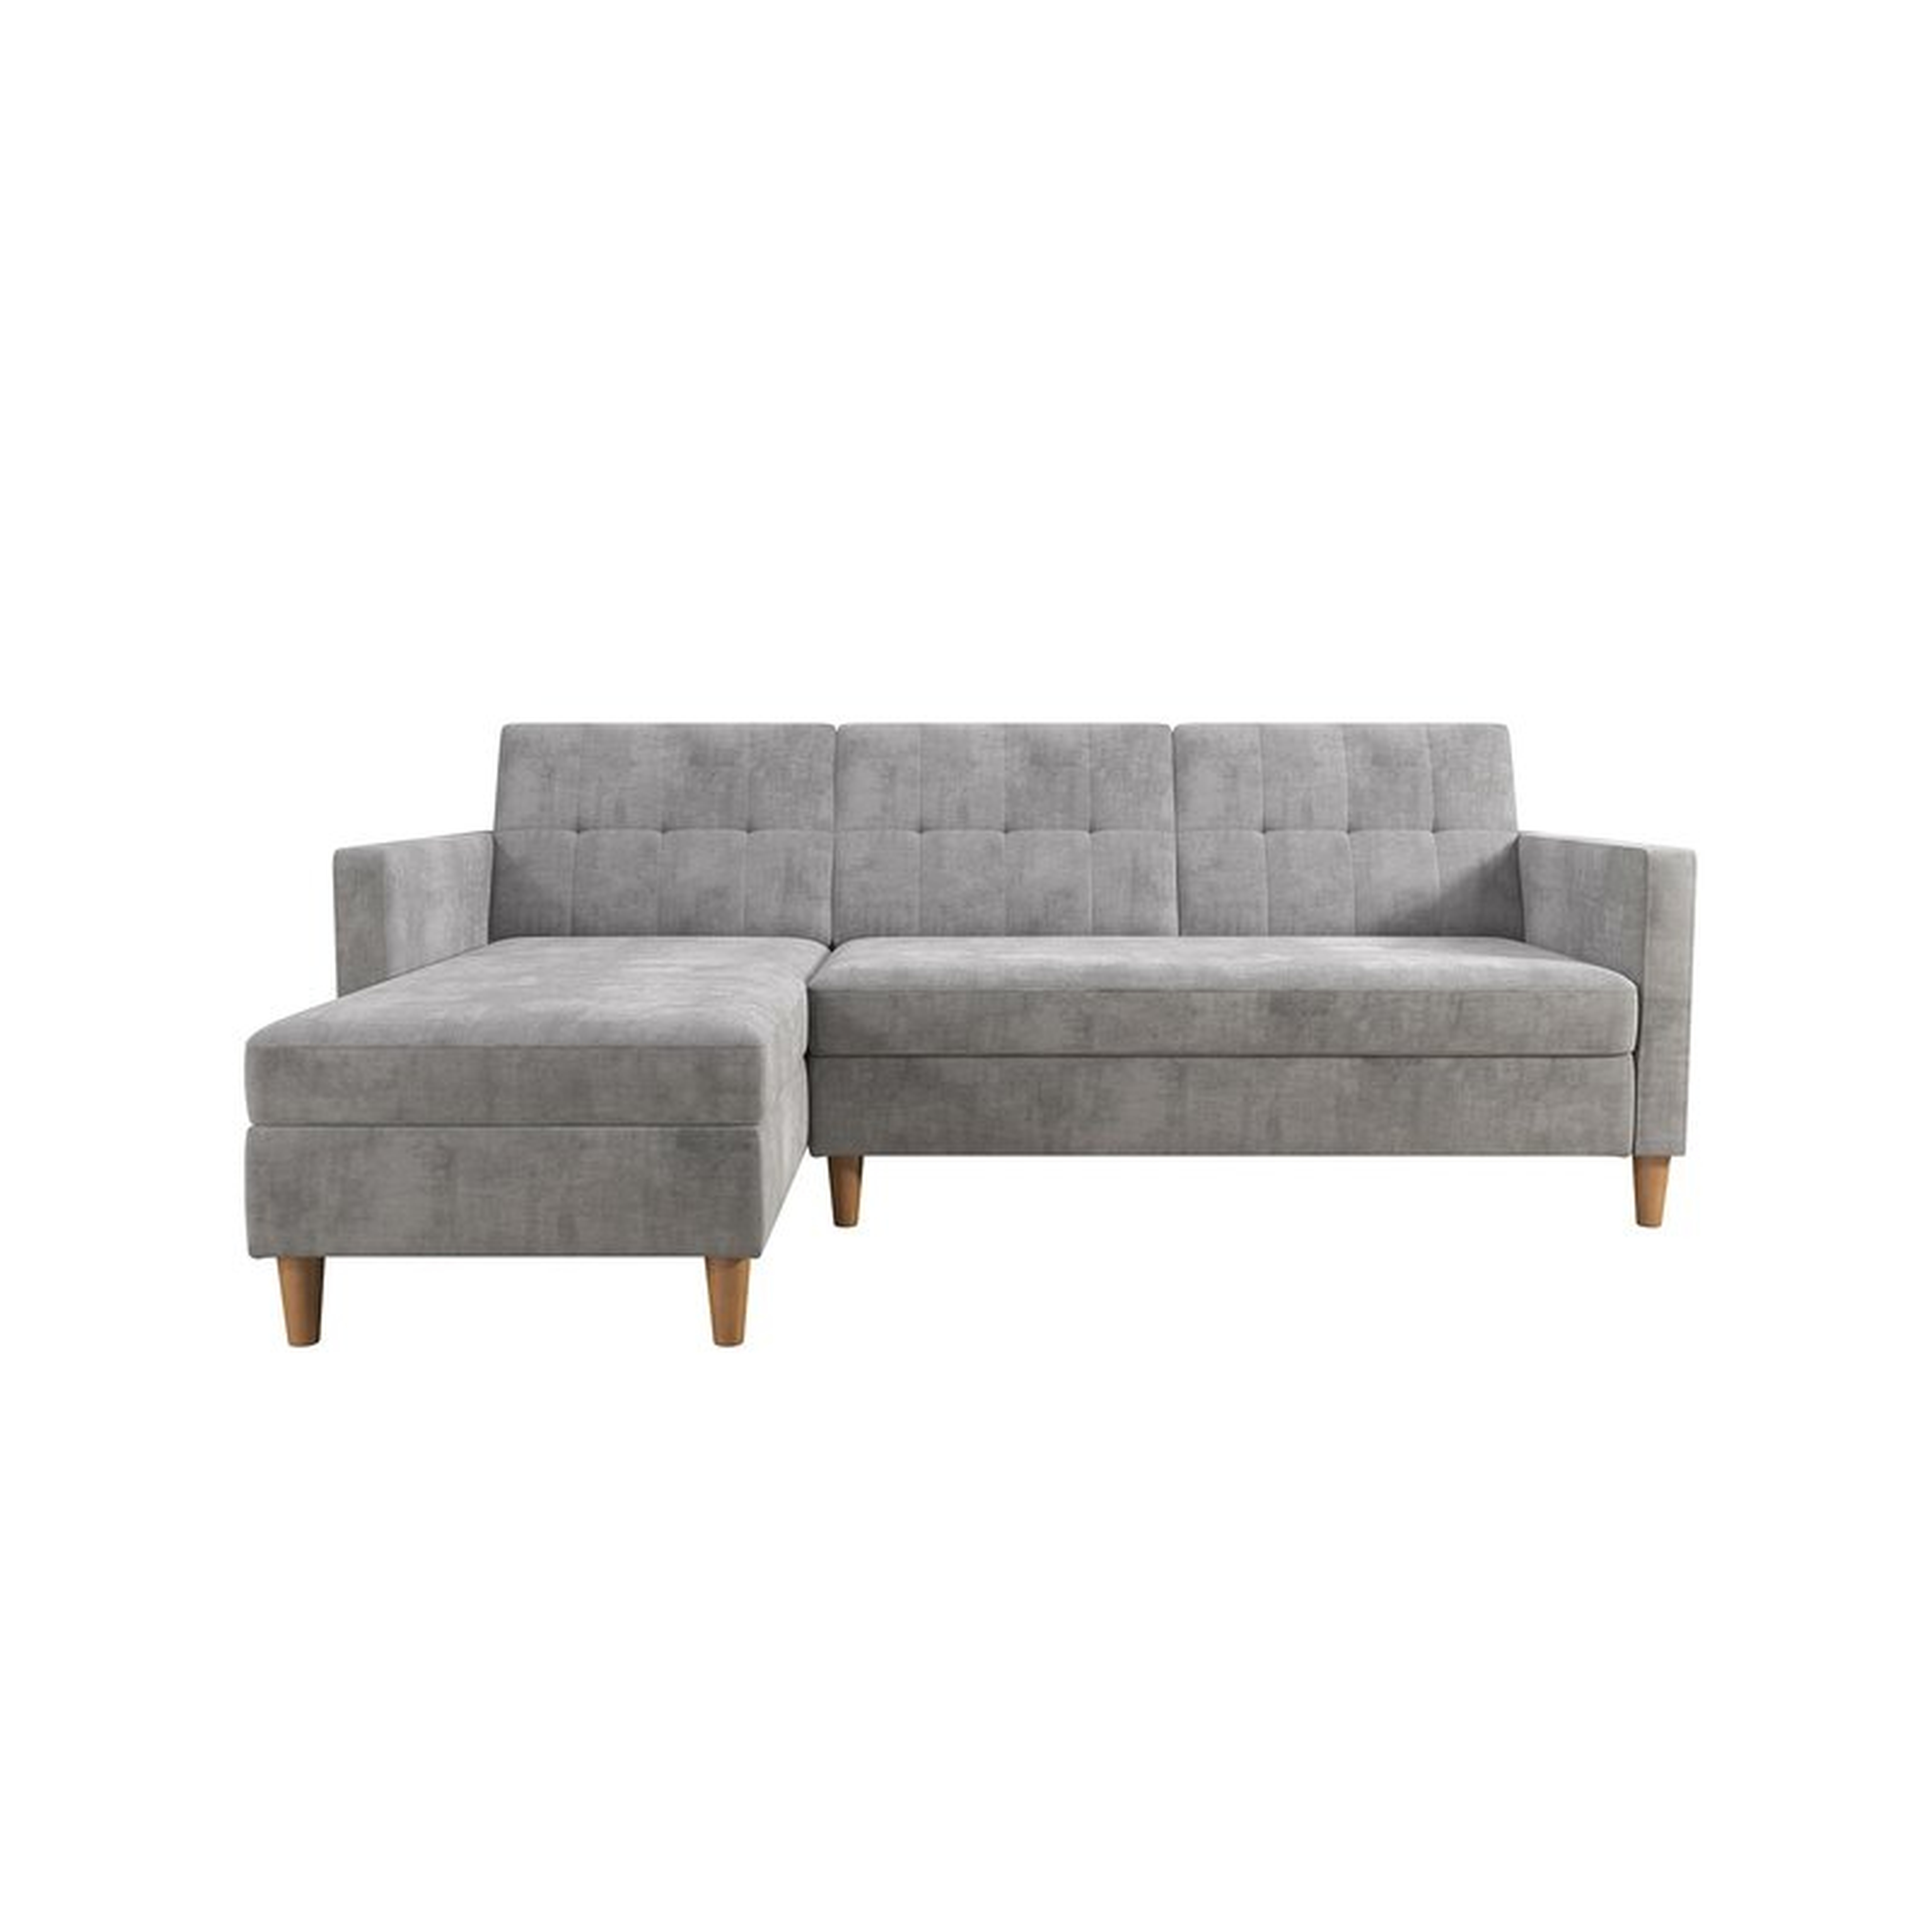 Kayden 84" Wide Reversible Sleeper Sofa & Chaise, Gray - Wayfair